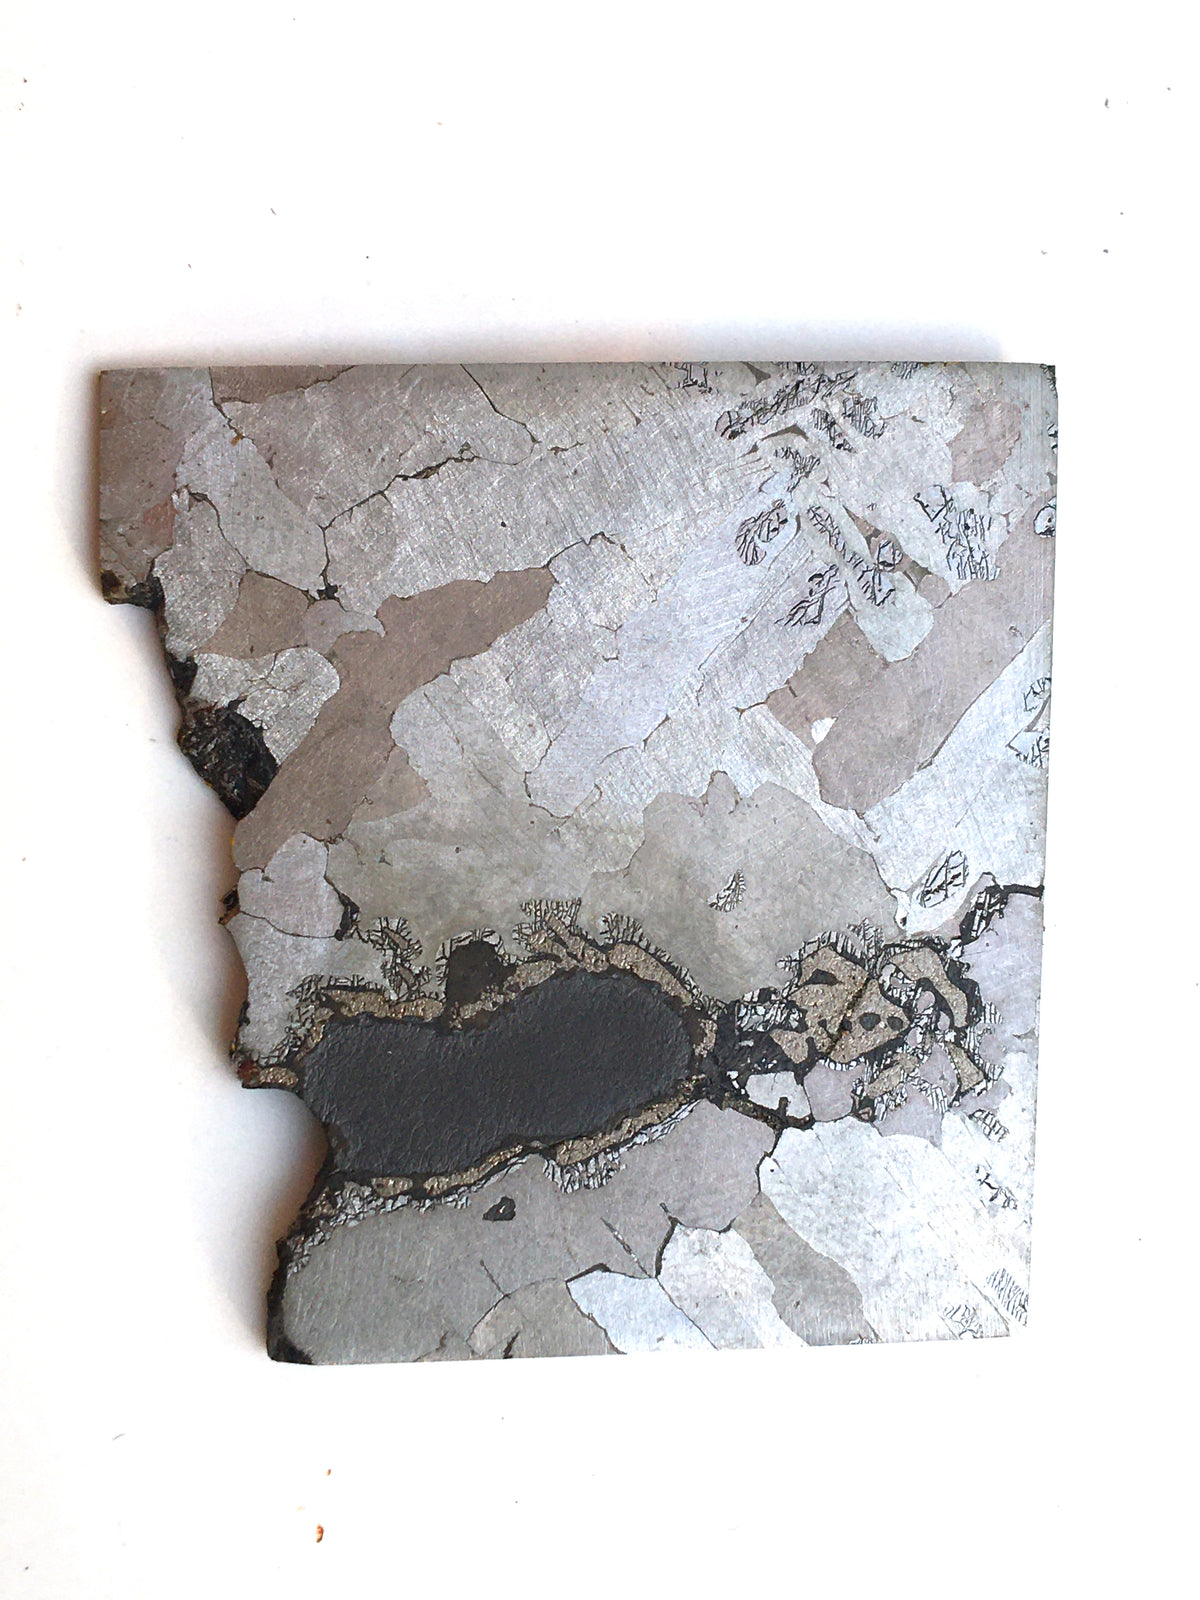 Acid etched sample of Nantan (iron nickel meteorite). Widdmanstatten pattern very visible.